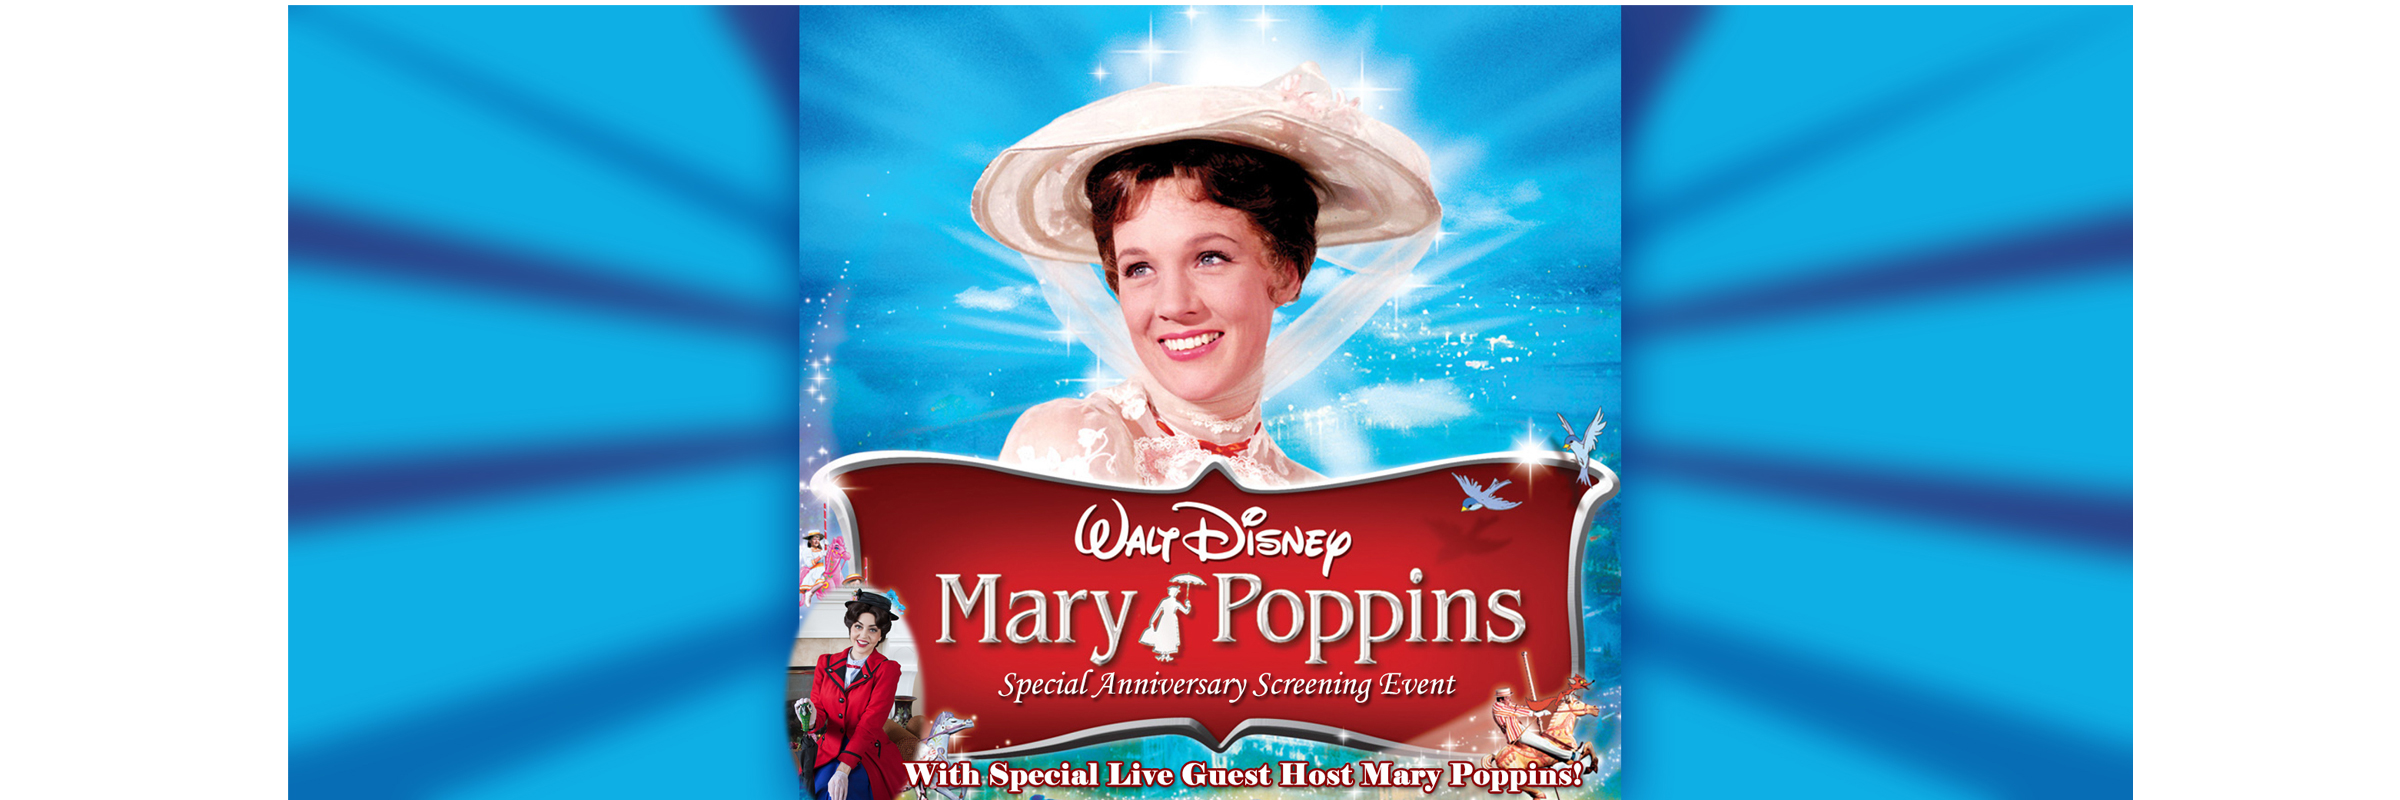 Disney's Mary Poppins - Anniversary Movie Screening